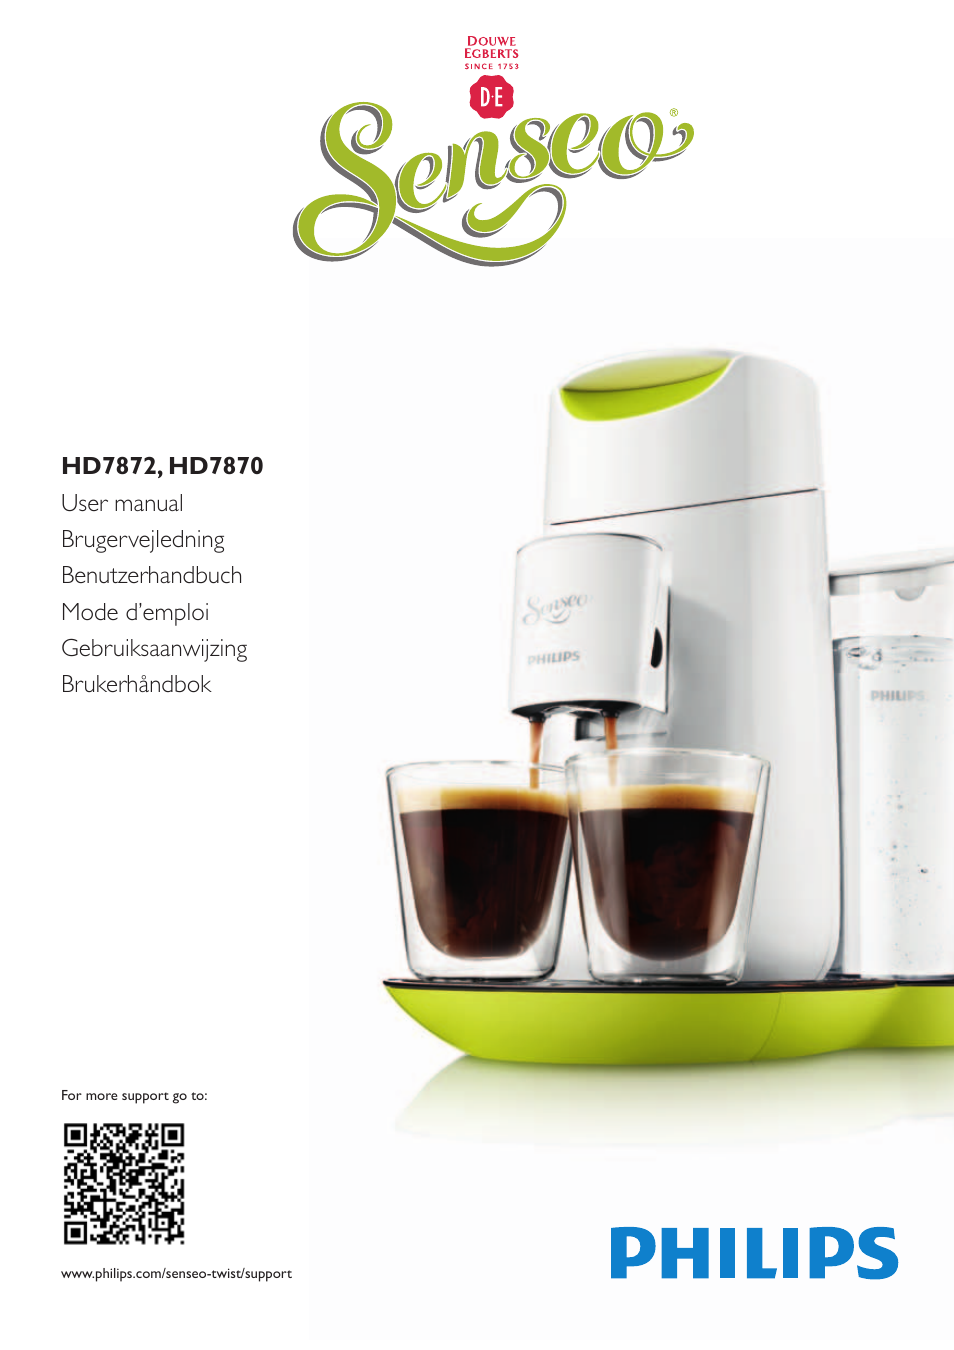 Philips SENSEO® Kaffeepadmaschine User Manual pages